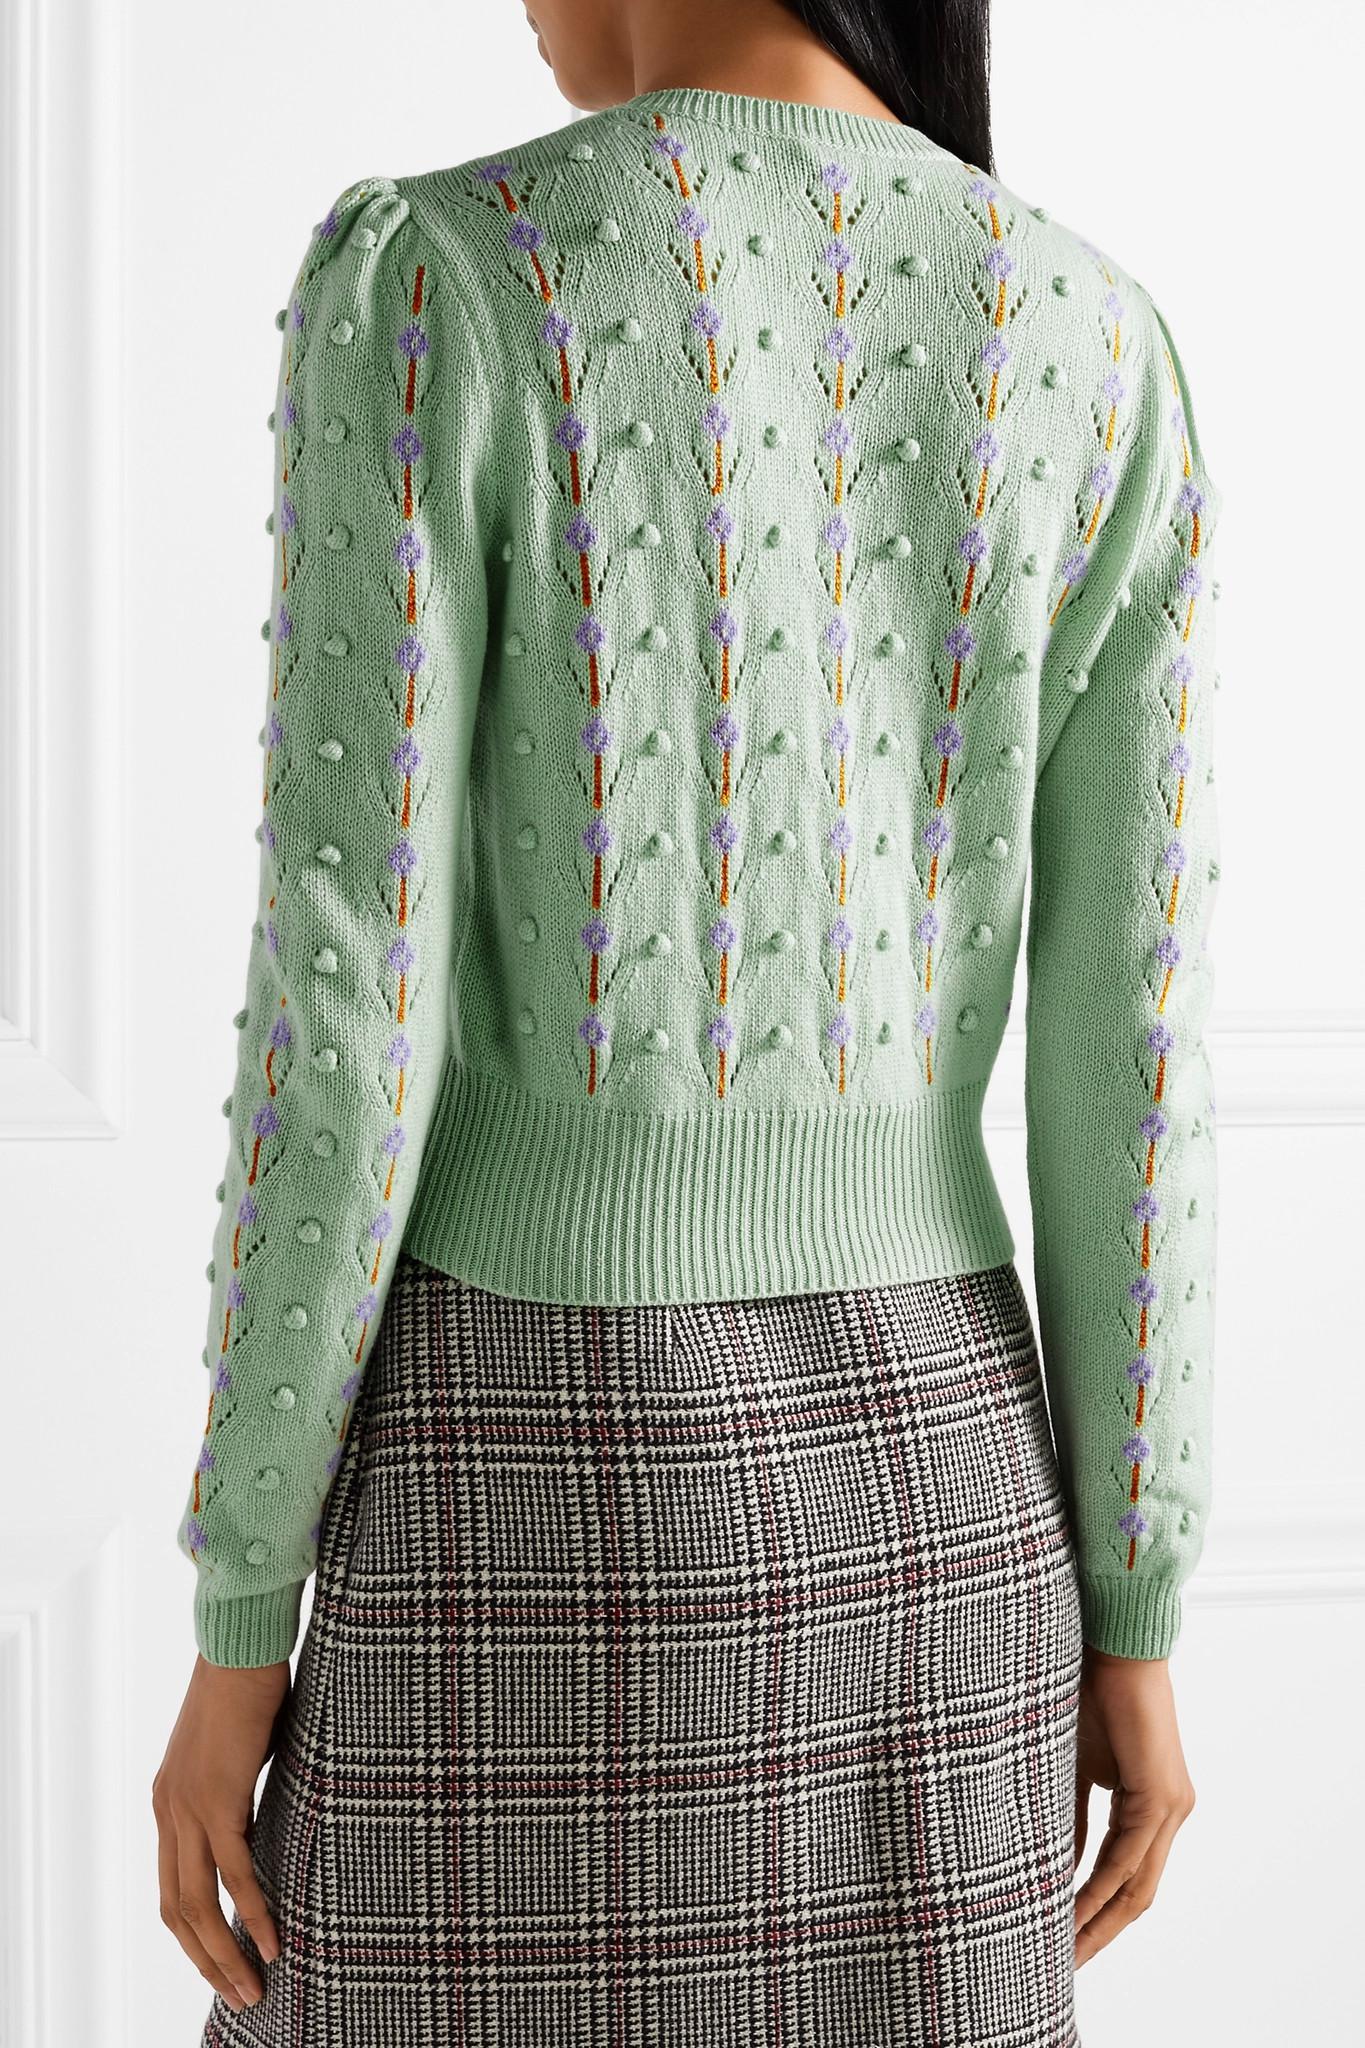 Miu Miu Pointelle-trimmed Cashmere Sweater in Mint (Green) - Lyst